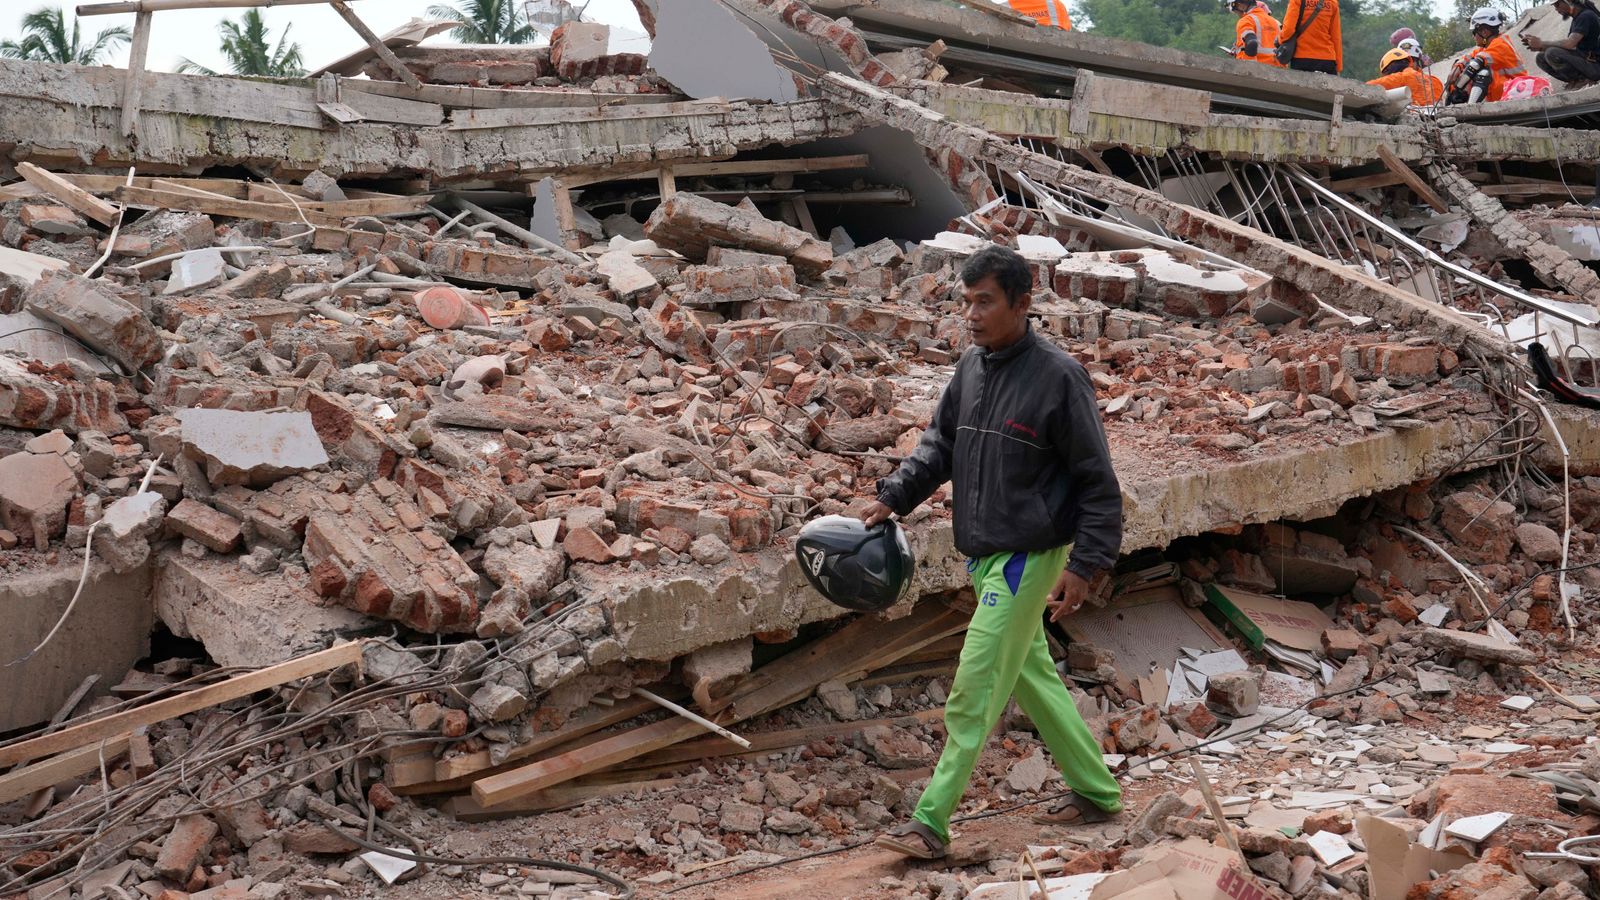 Indonesia earthquake: Many schoolchildren among 268 killed in West Java